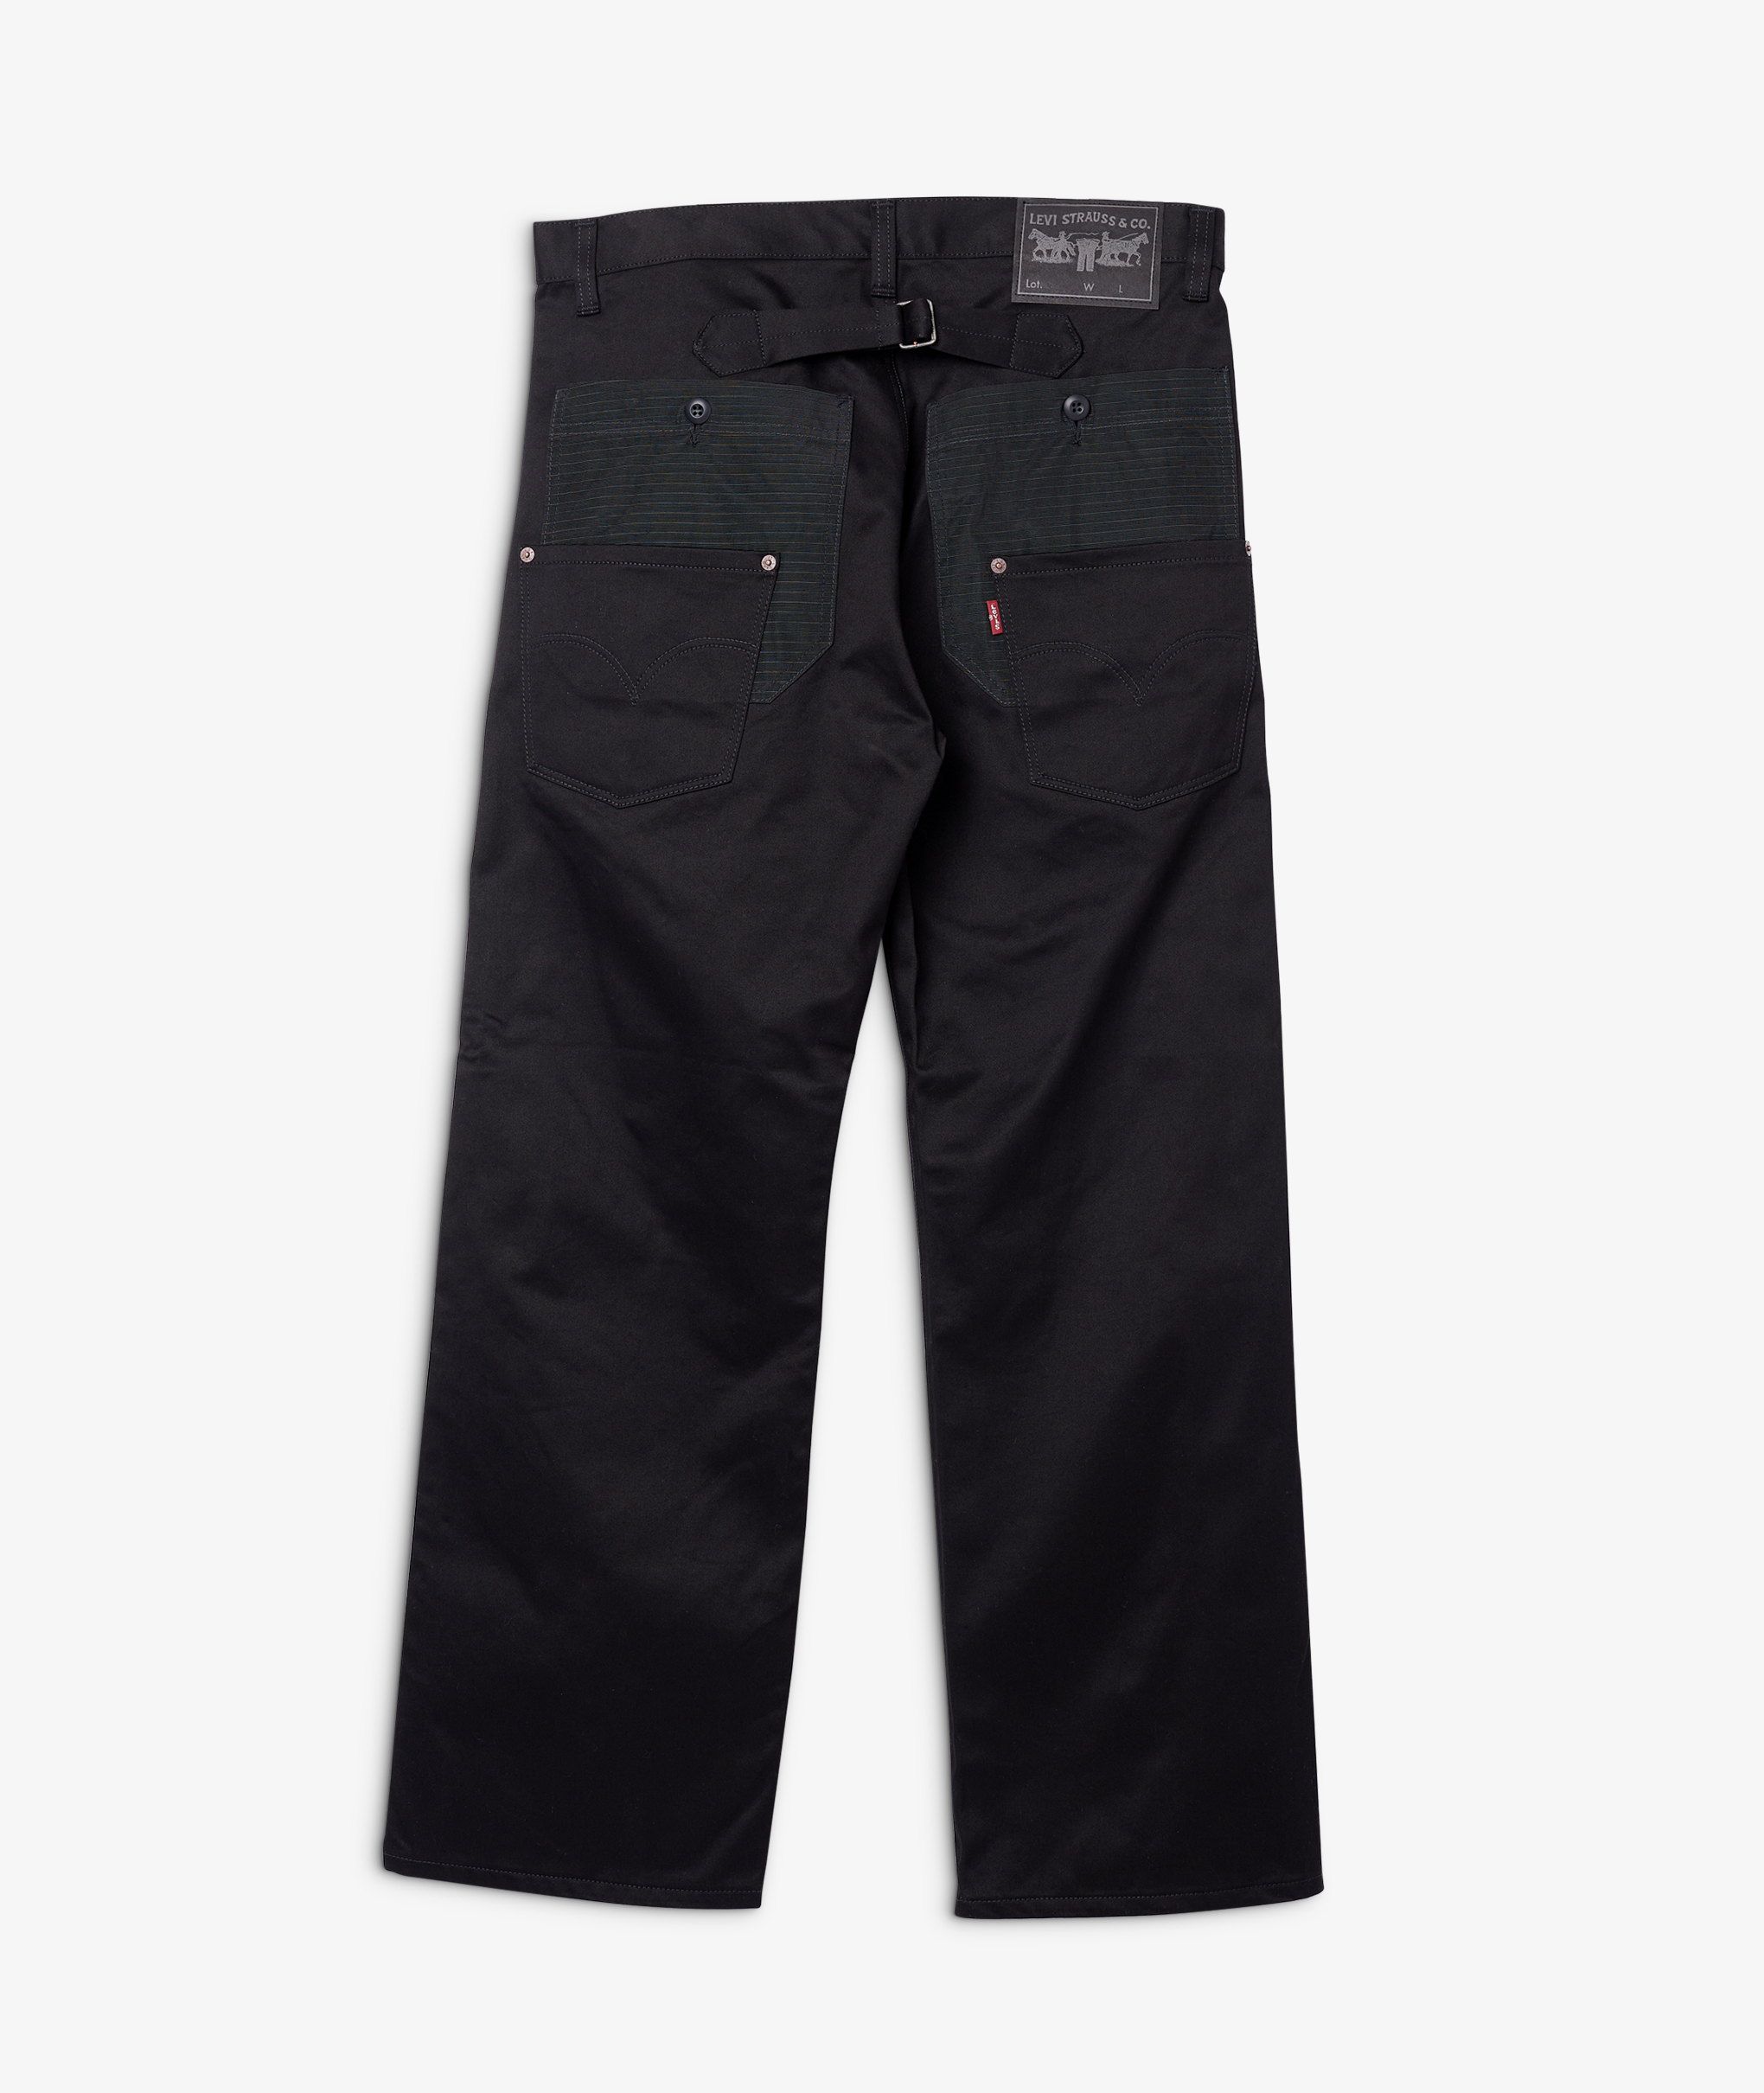 Norse Store  Shipping Worldwide - Junya Watanabe MAN JWM x Levi's Pants -  Black